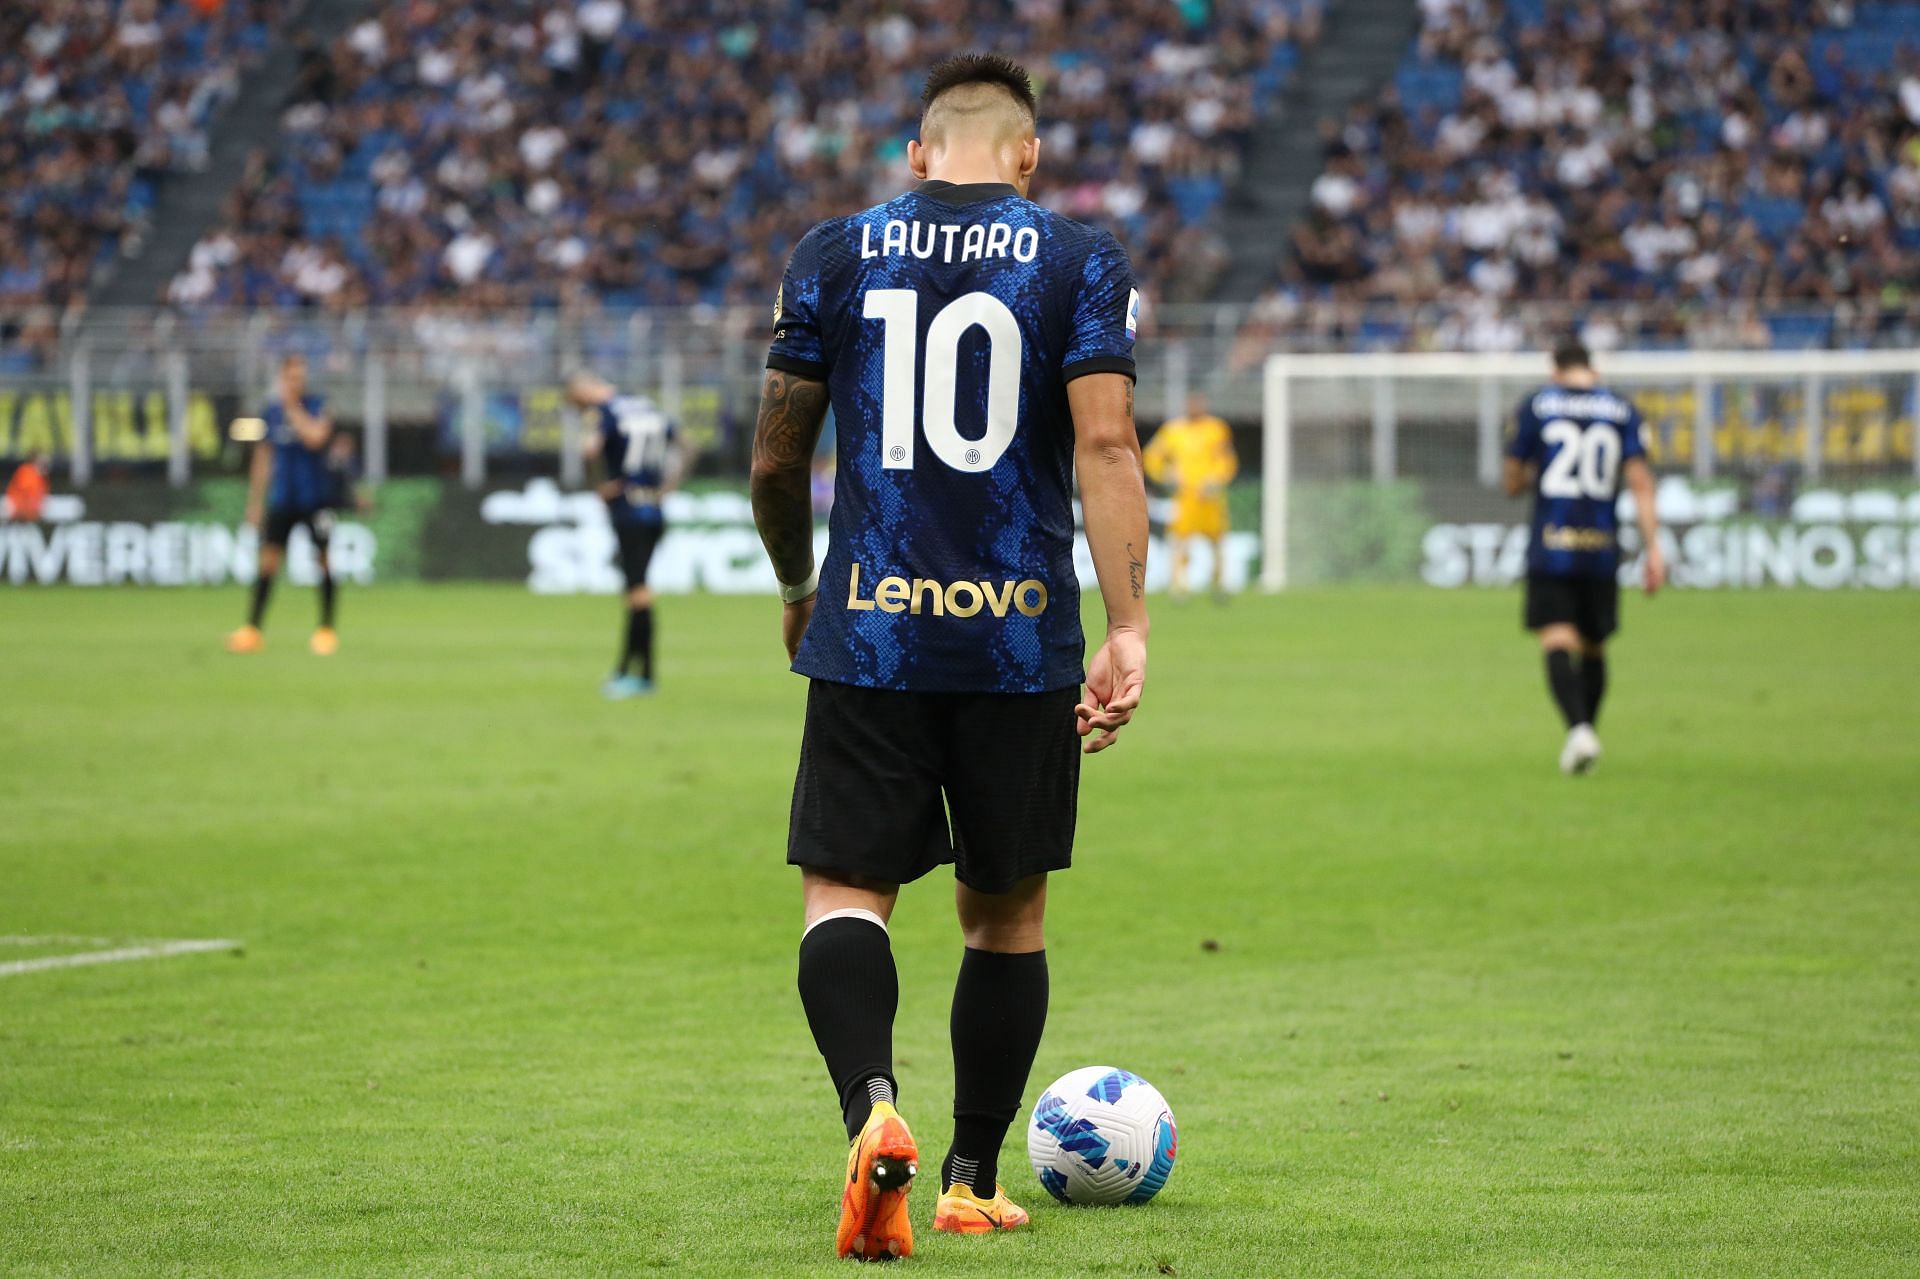 Martinez scored 21 league goals for Inter Milan last season.